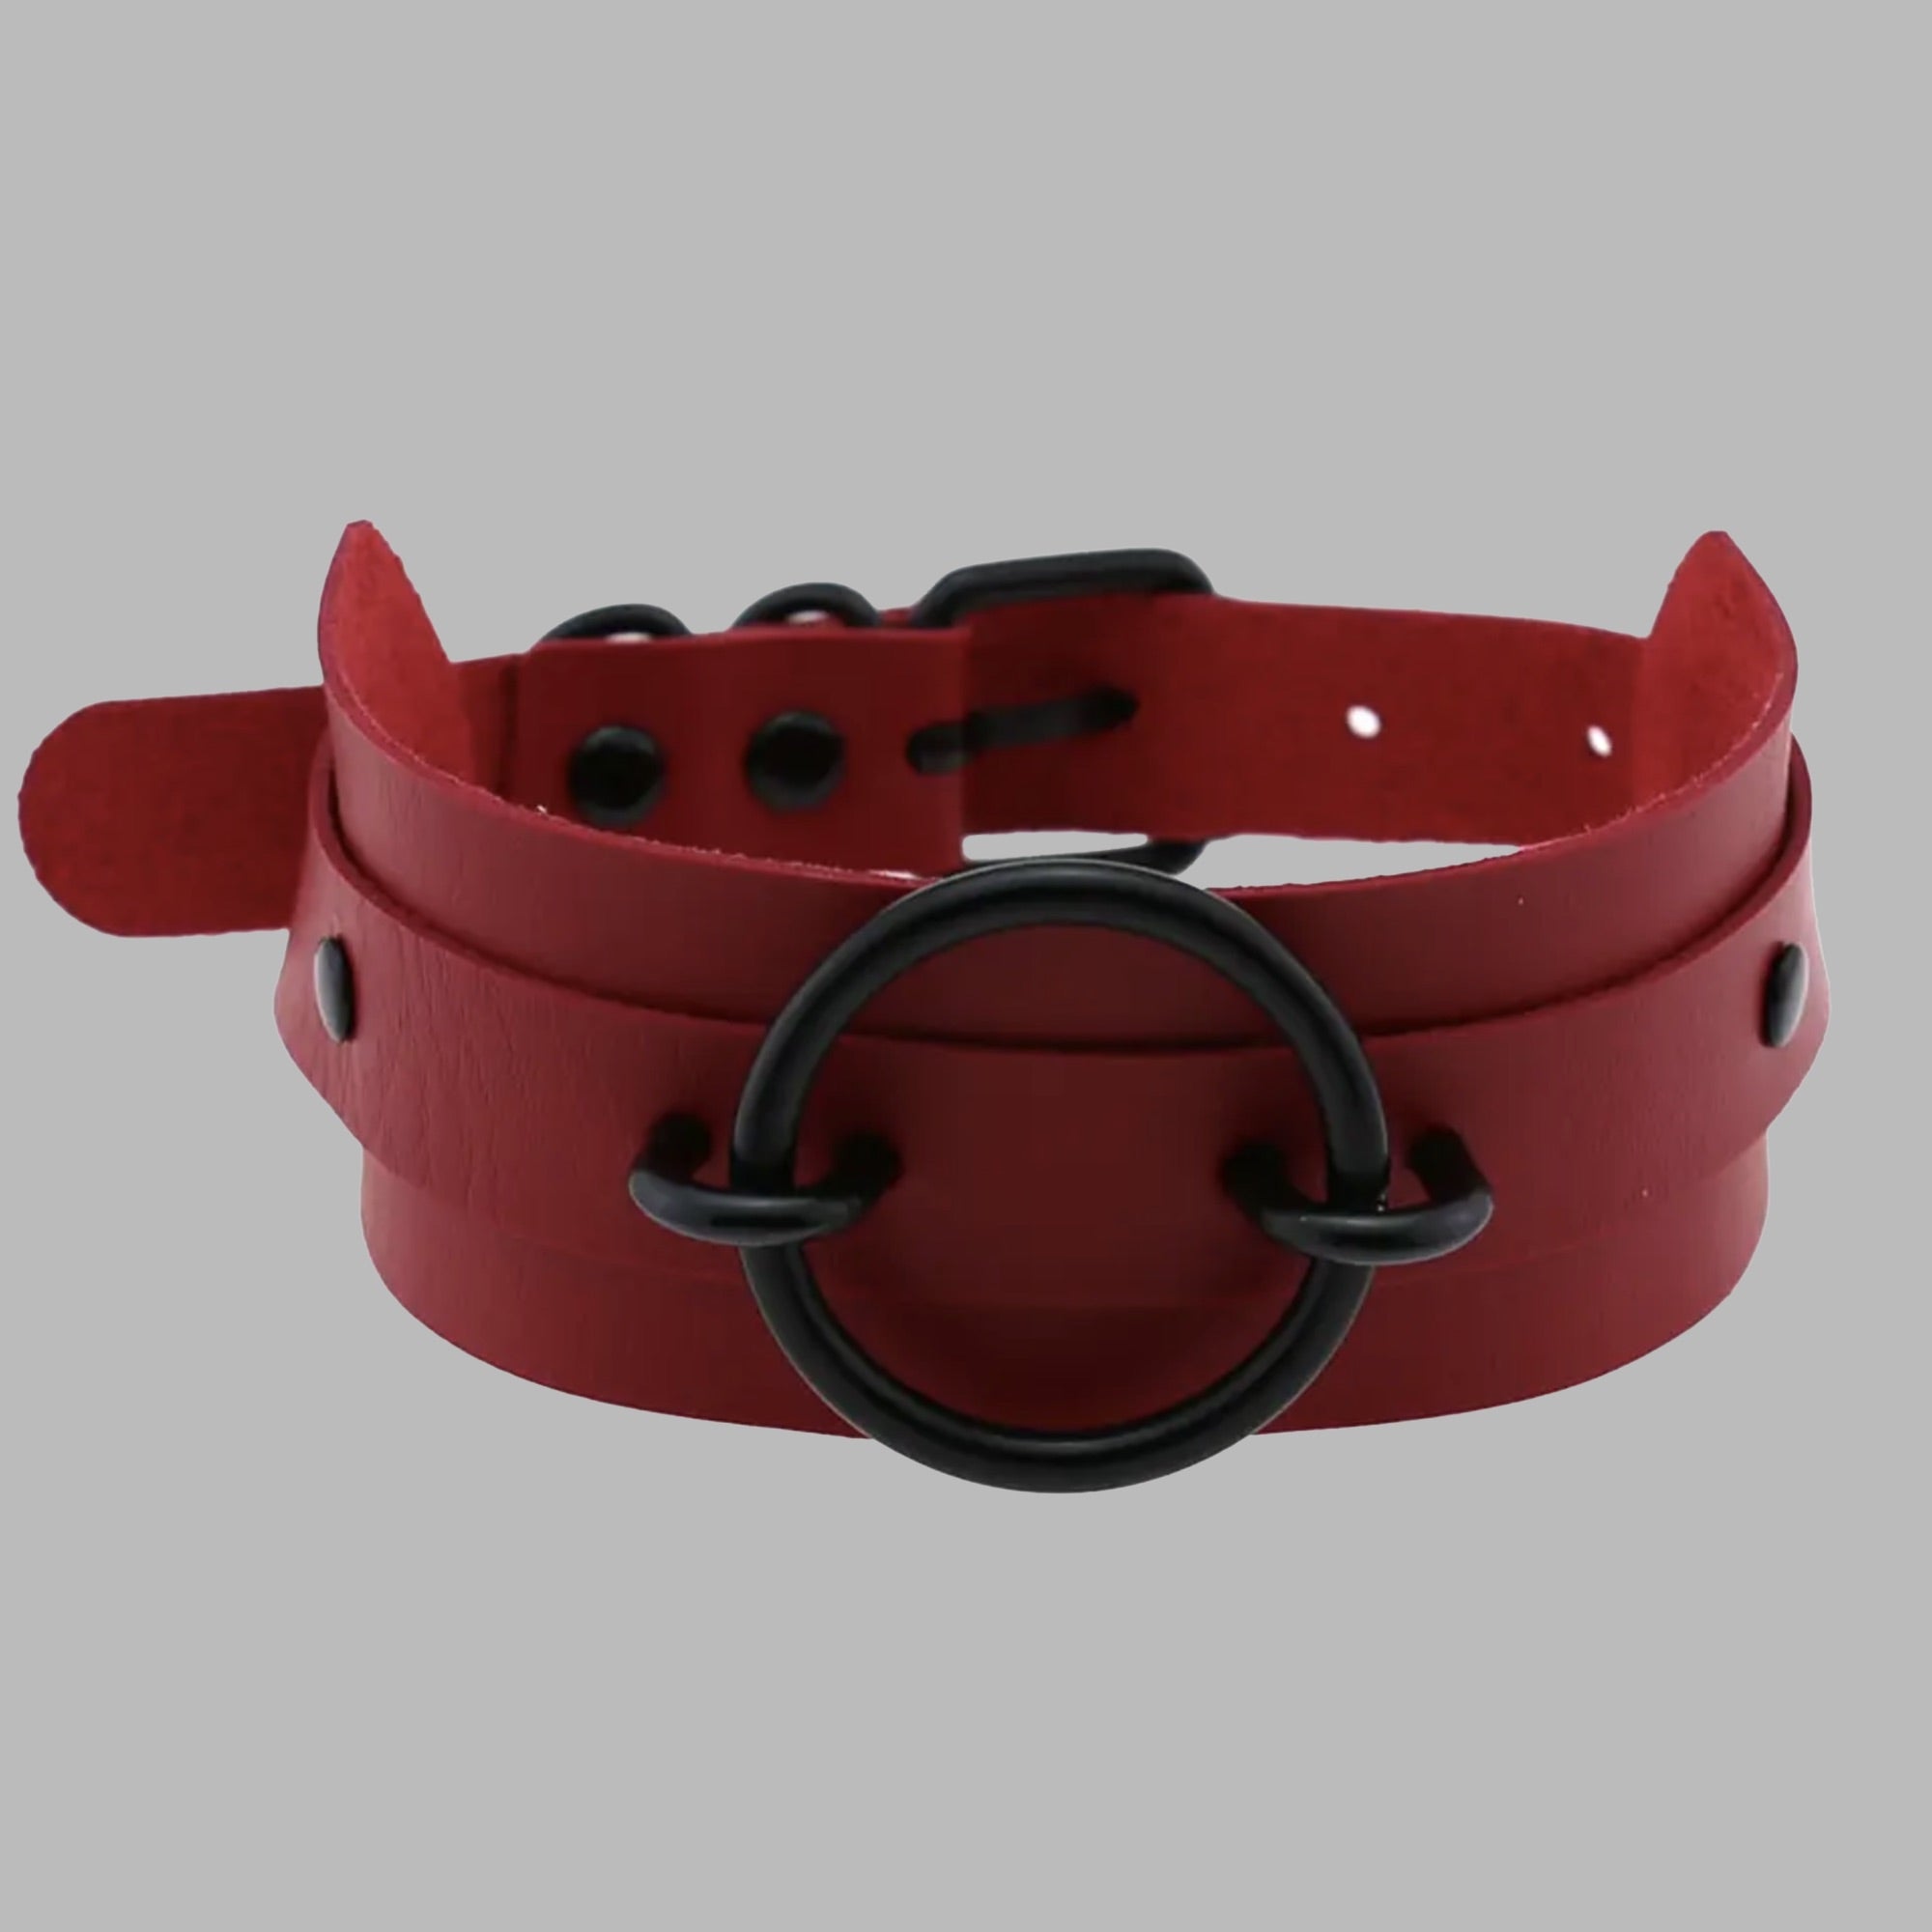 Fixed O Ring Choker Collar - Red & Black